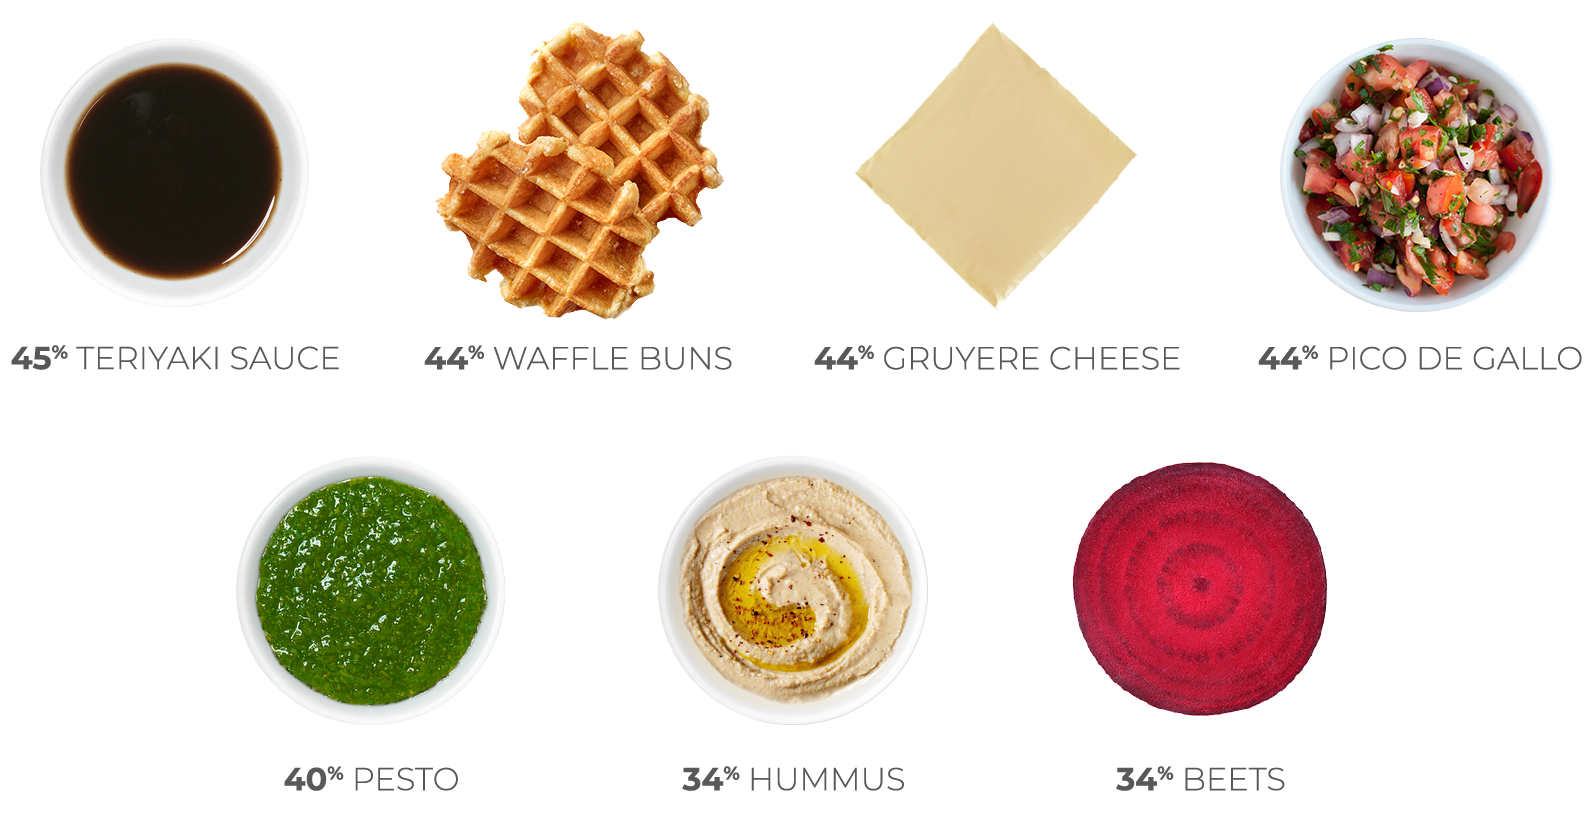 Teriyaki Sauce 45%; Waffle Buns 44%; Gruyere Cheese 44%; Pico de Gallo 44%; Pesto 40%; Hummus 34%; Beets 34%